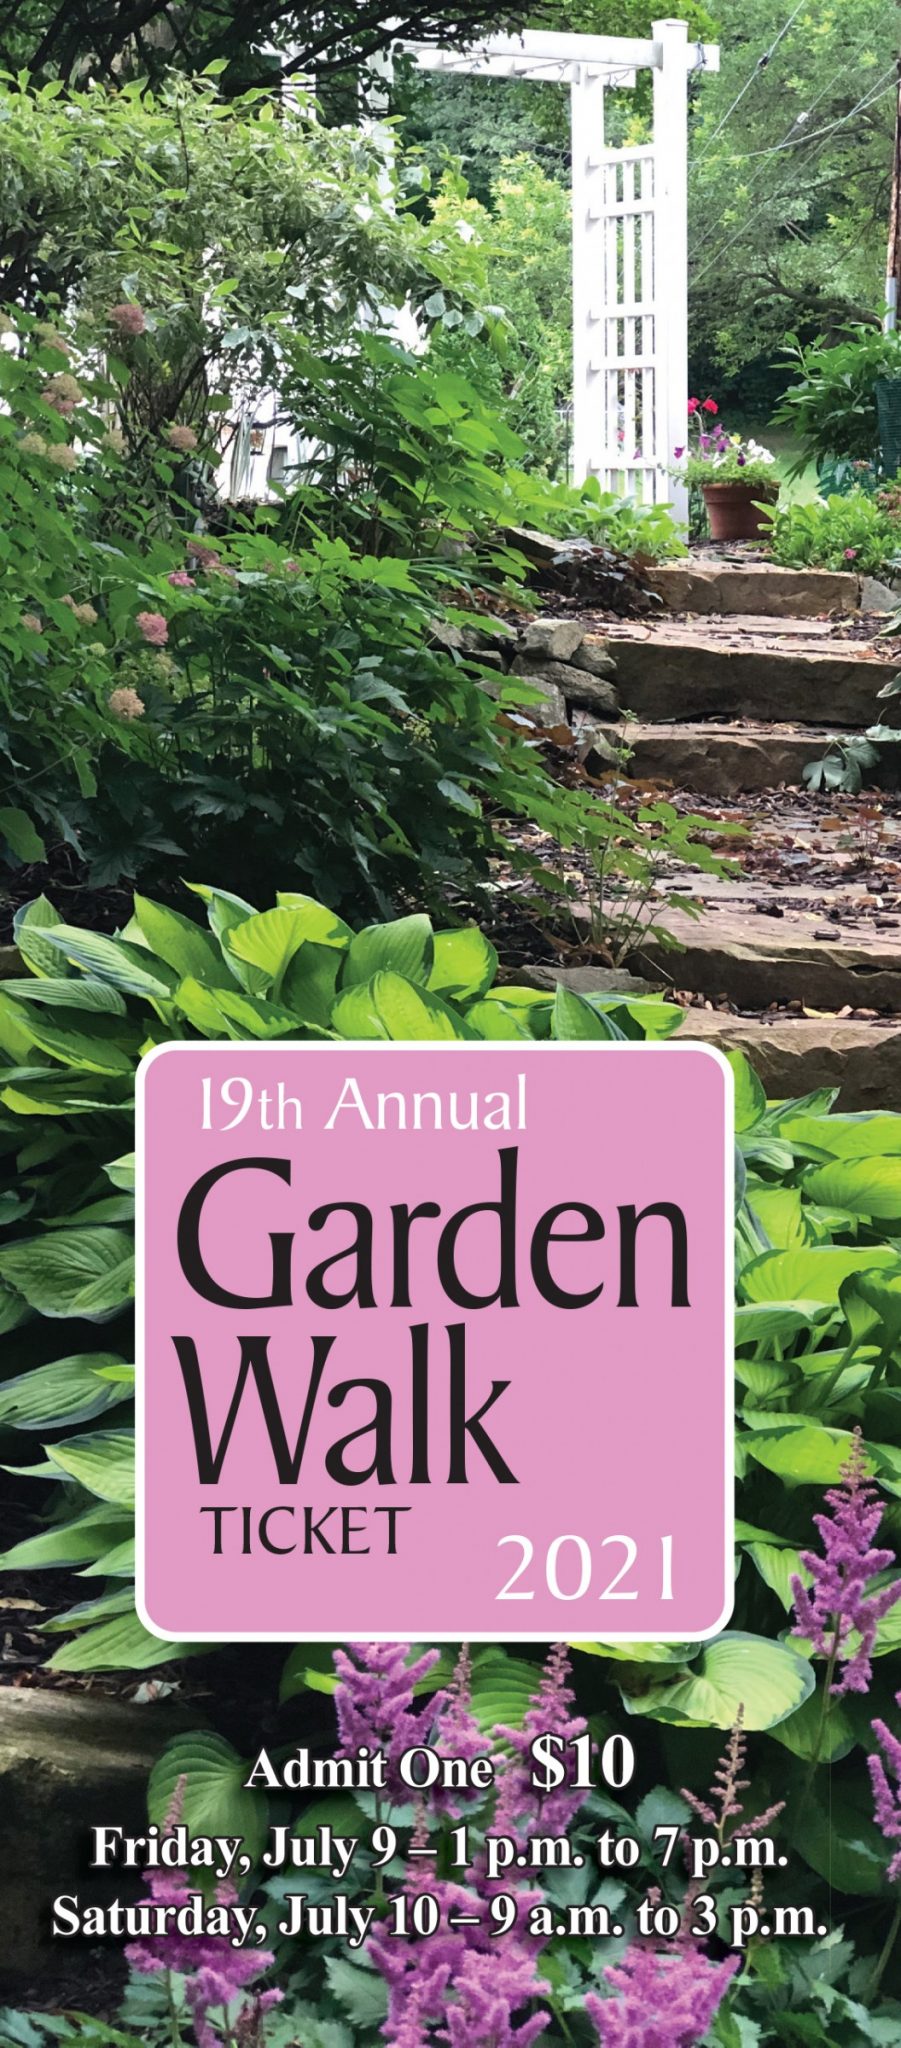 Garden Walk Master Gardener Program of Marathon County